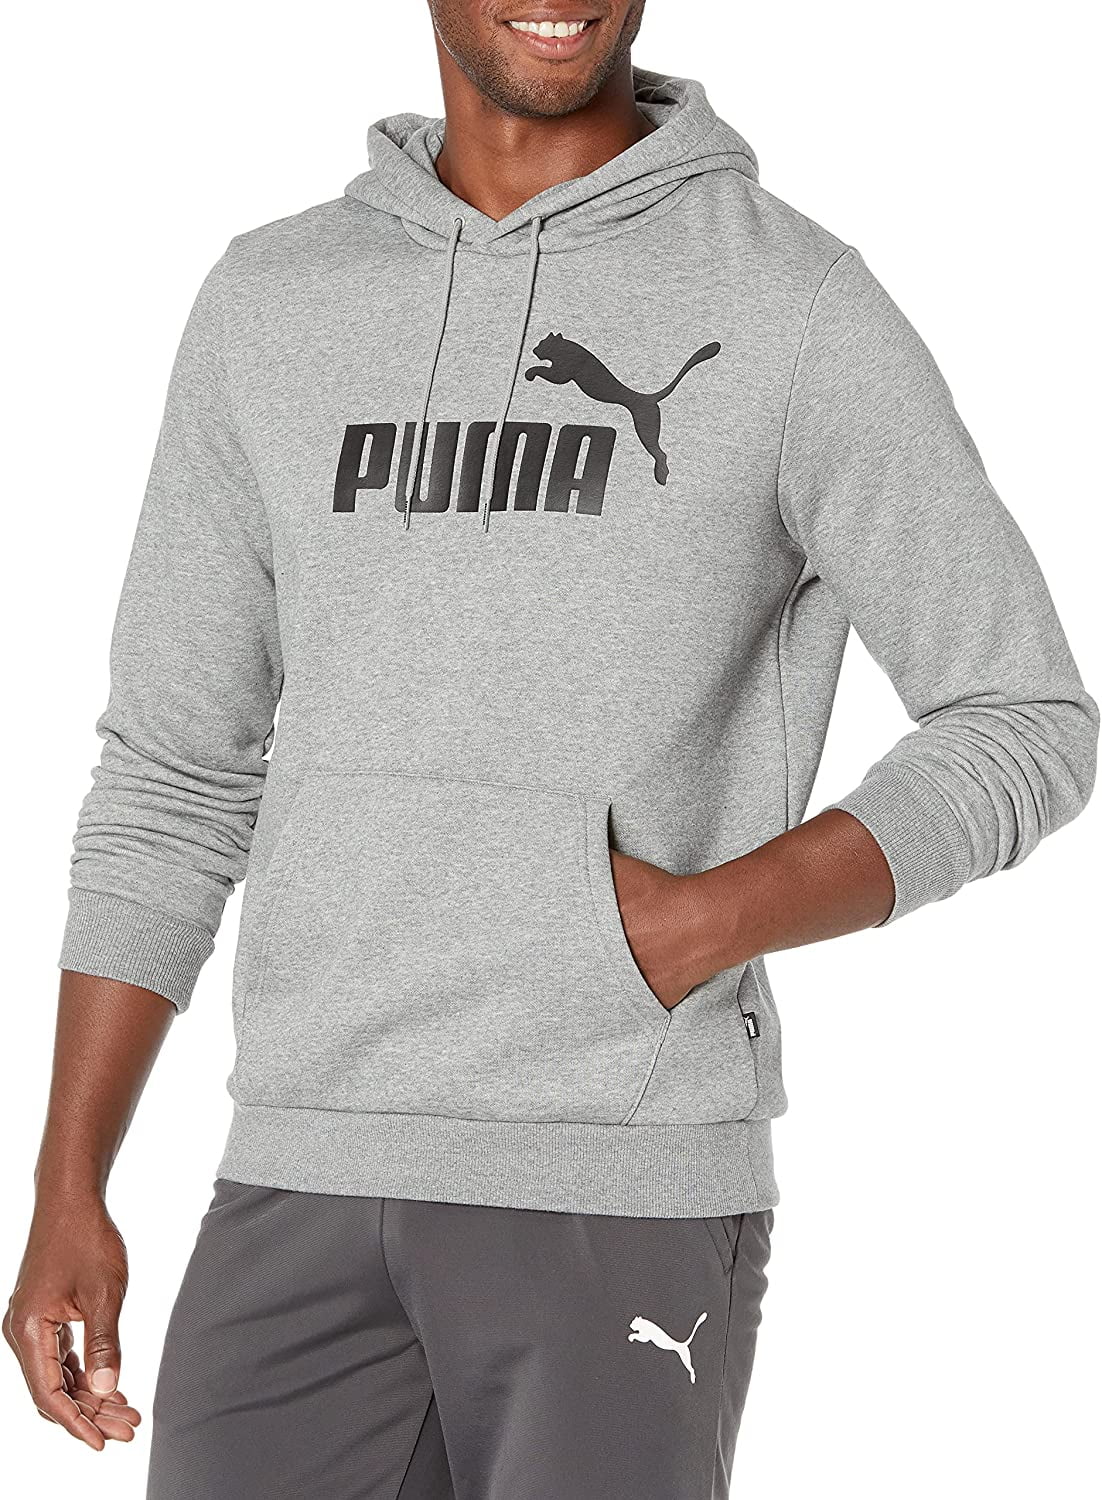 PUMA Mens Essentials Big Logo Fleece Hoodie Large Medium Gray Heather | Sweatshirts